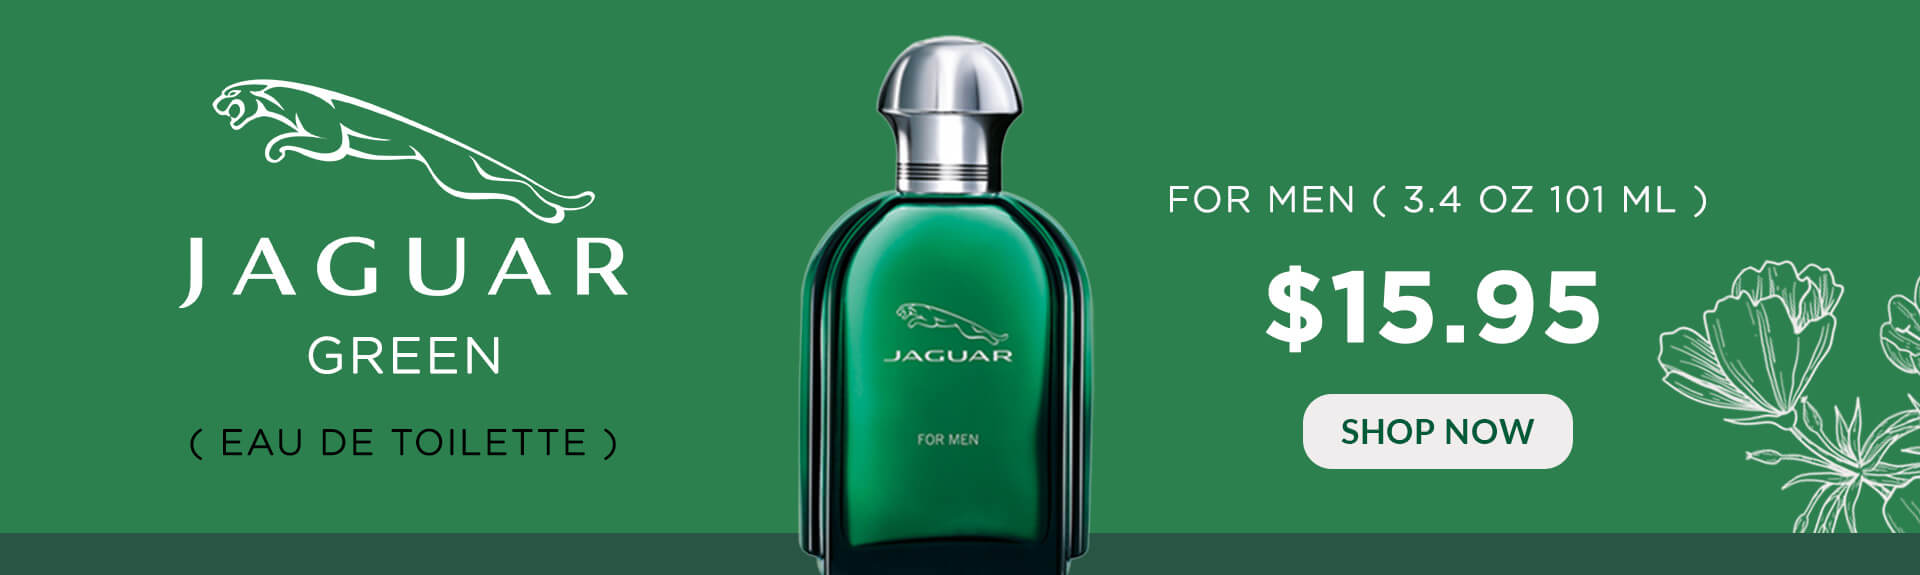 Jaguar Green by Jaguar for Men